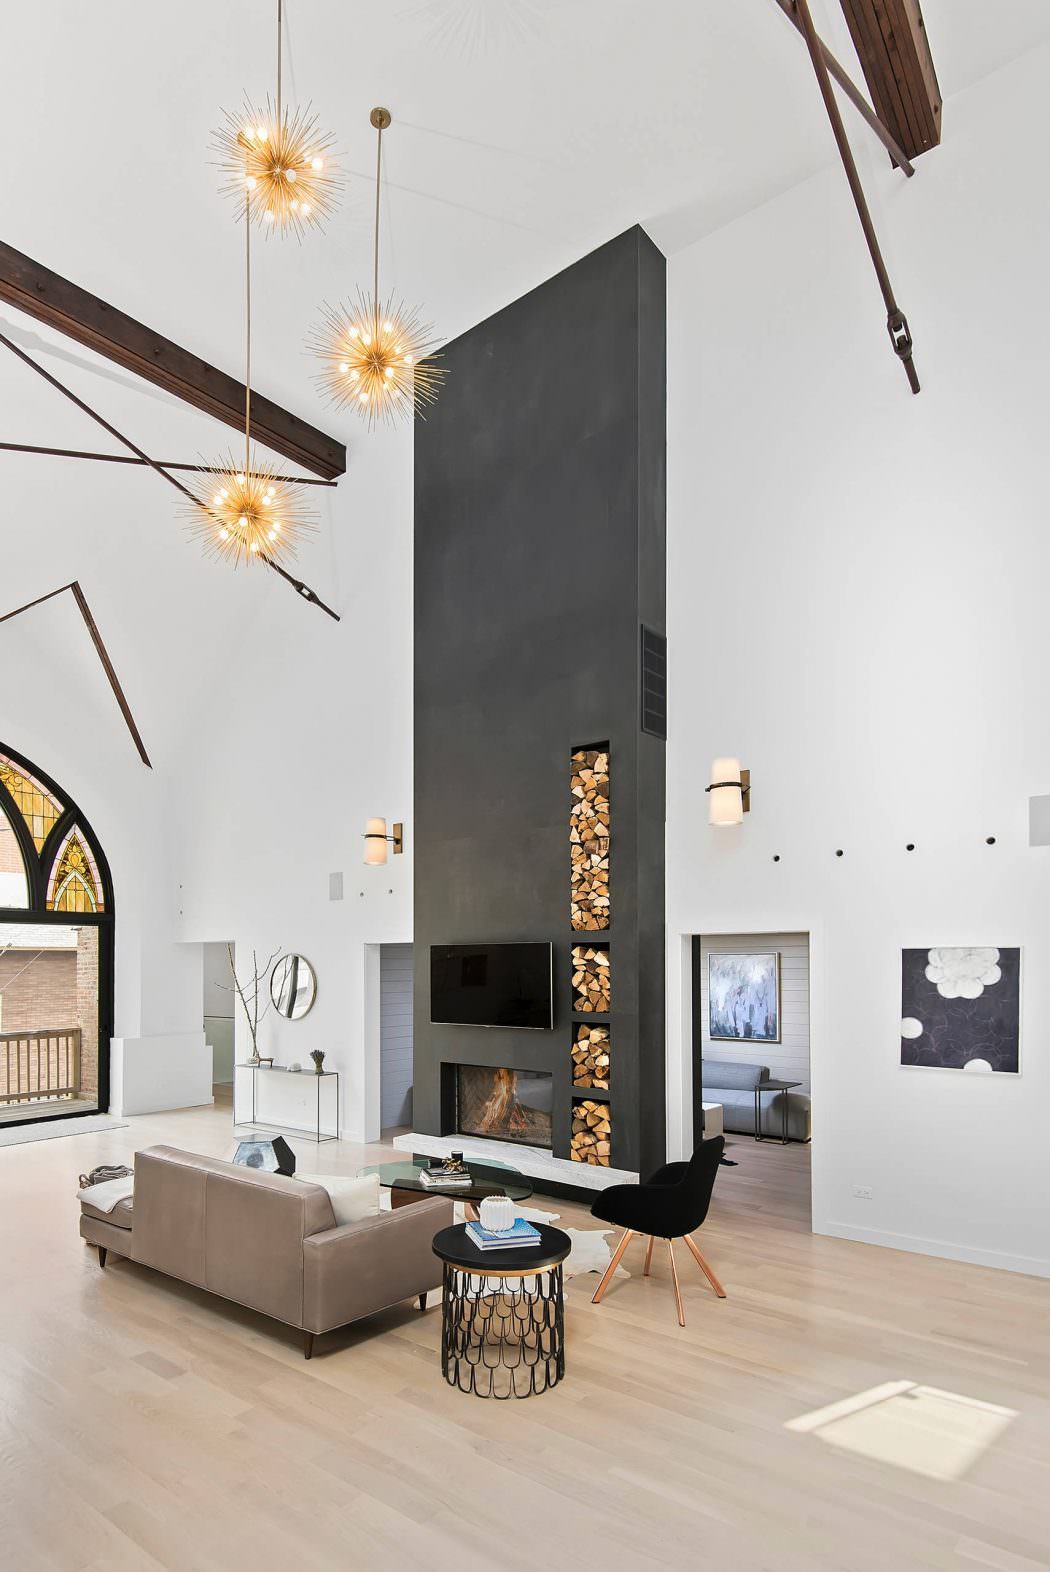 Striking modern living room with sleek fireplace, wood storage, and starburst light fixtures.